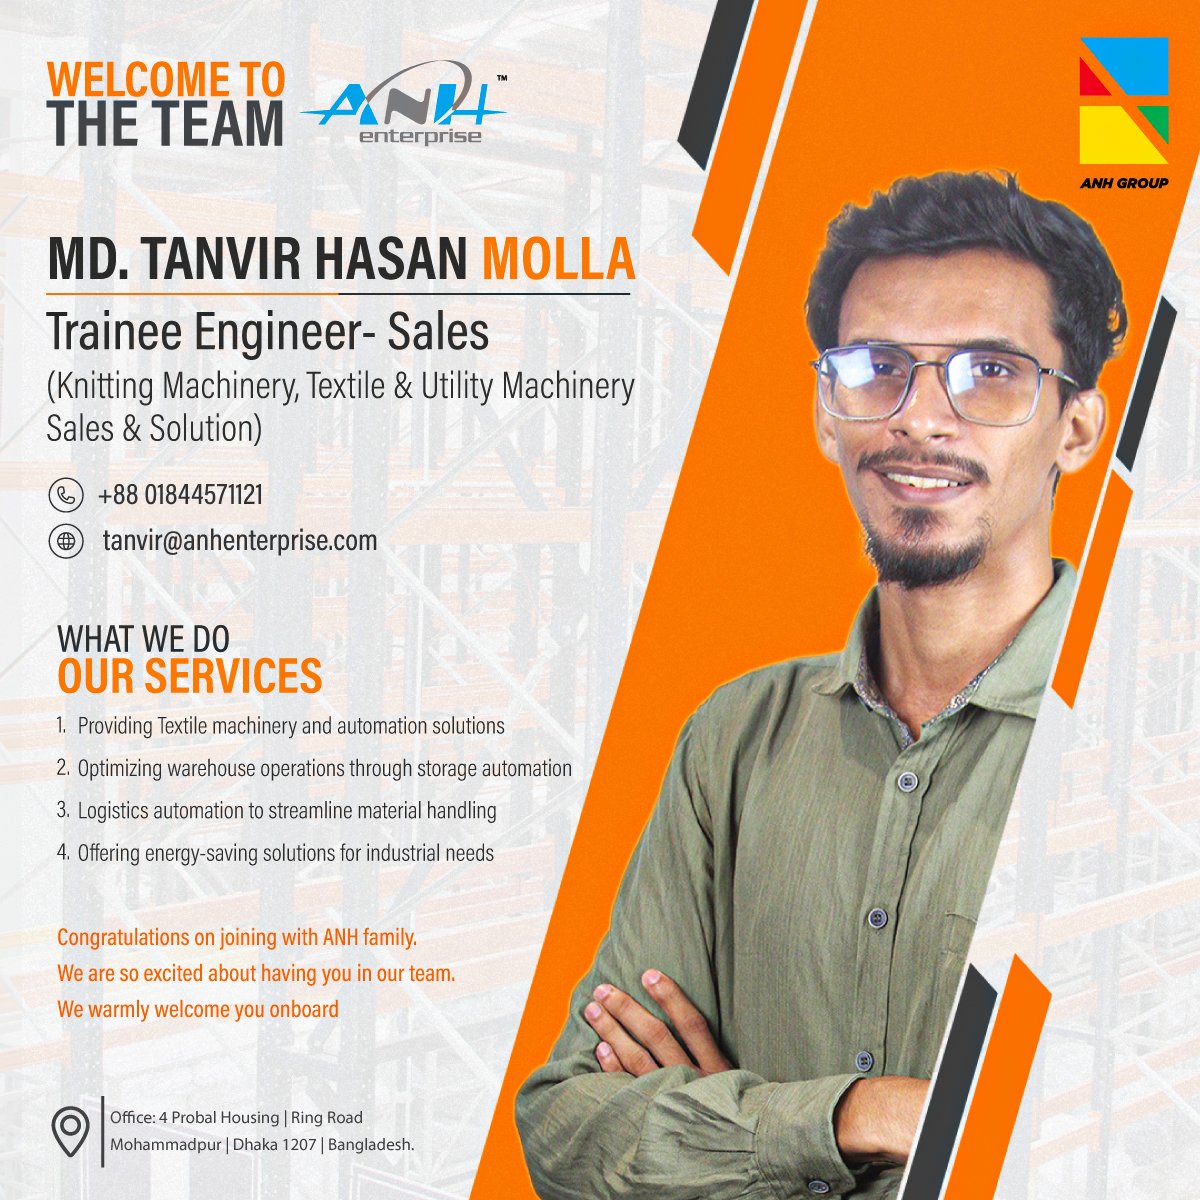 Meet Our New Trainee Engineer(sales) MD. Tanvir Hasan Molla